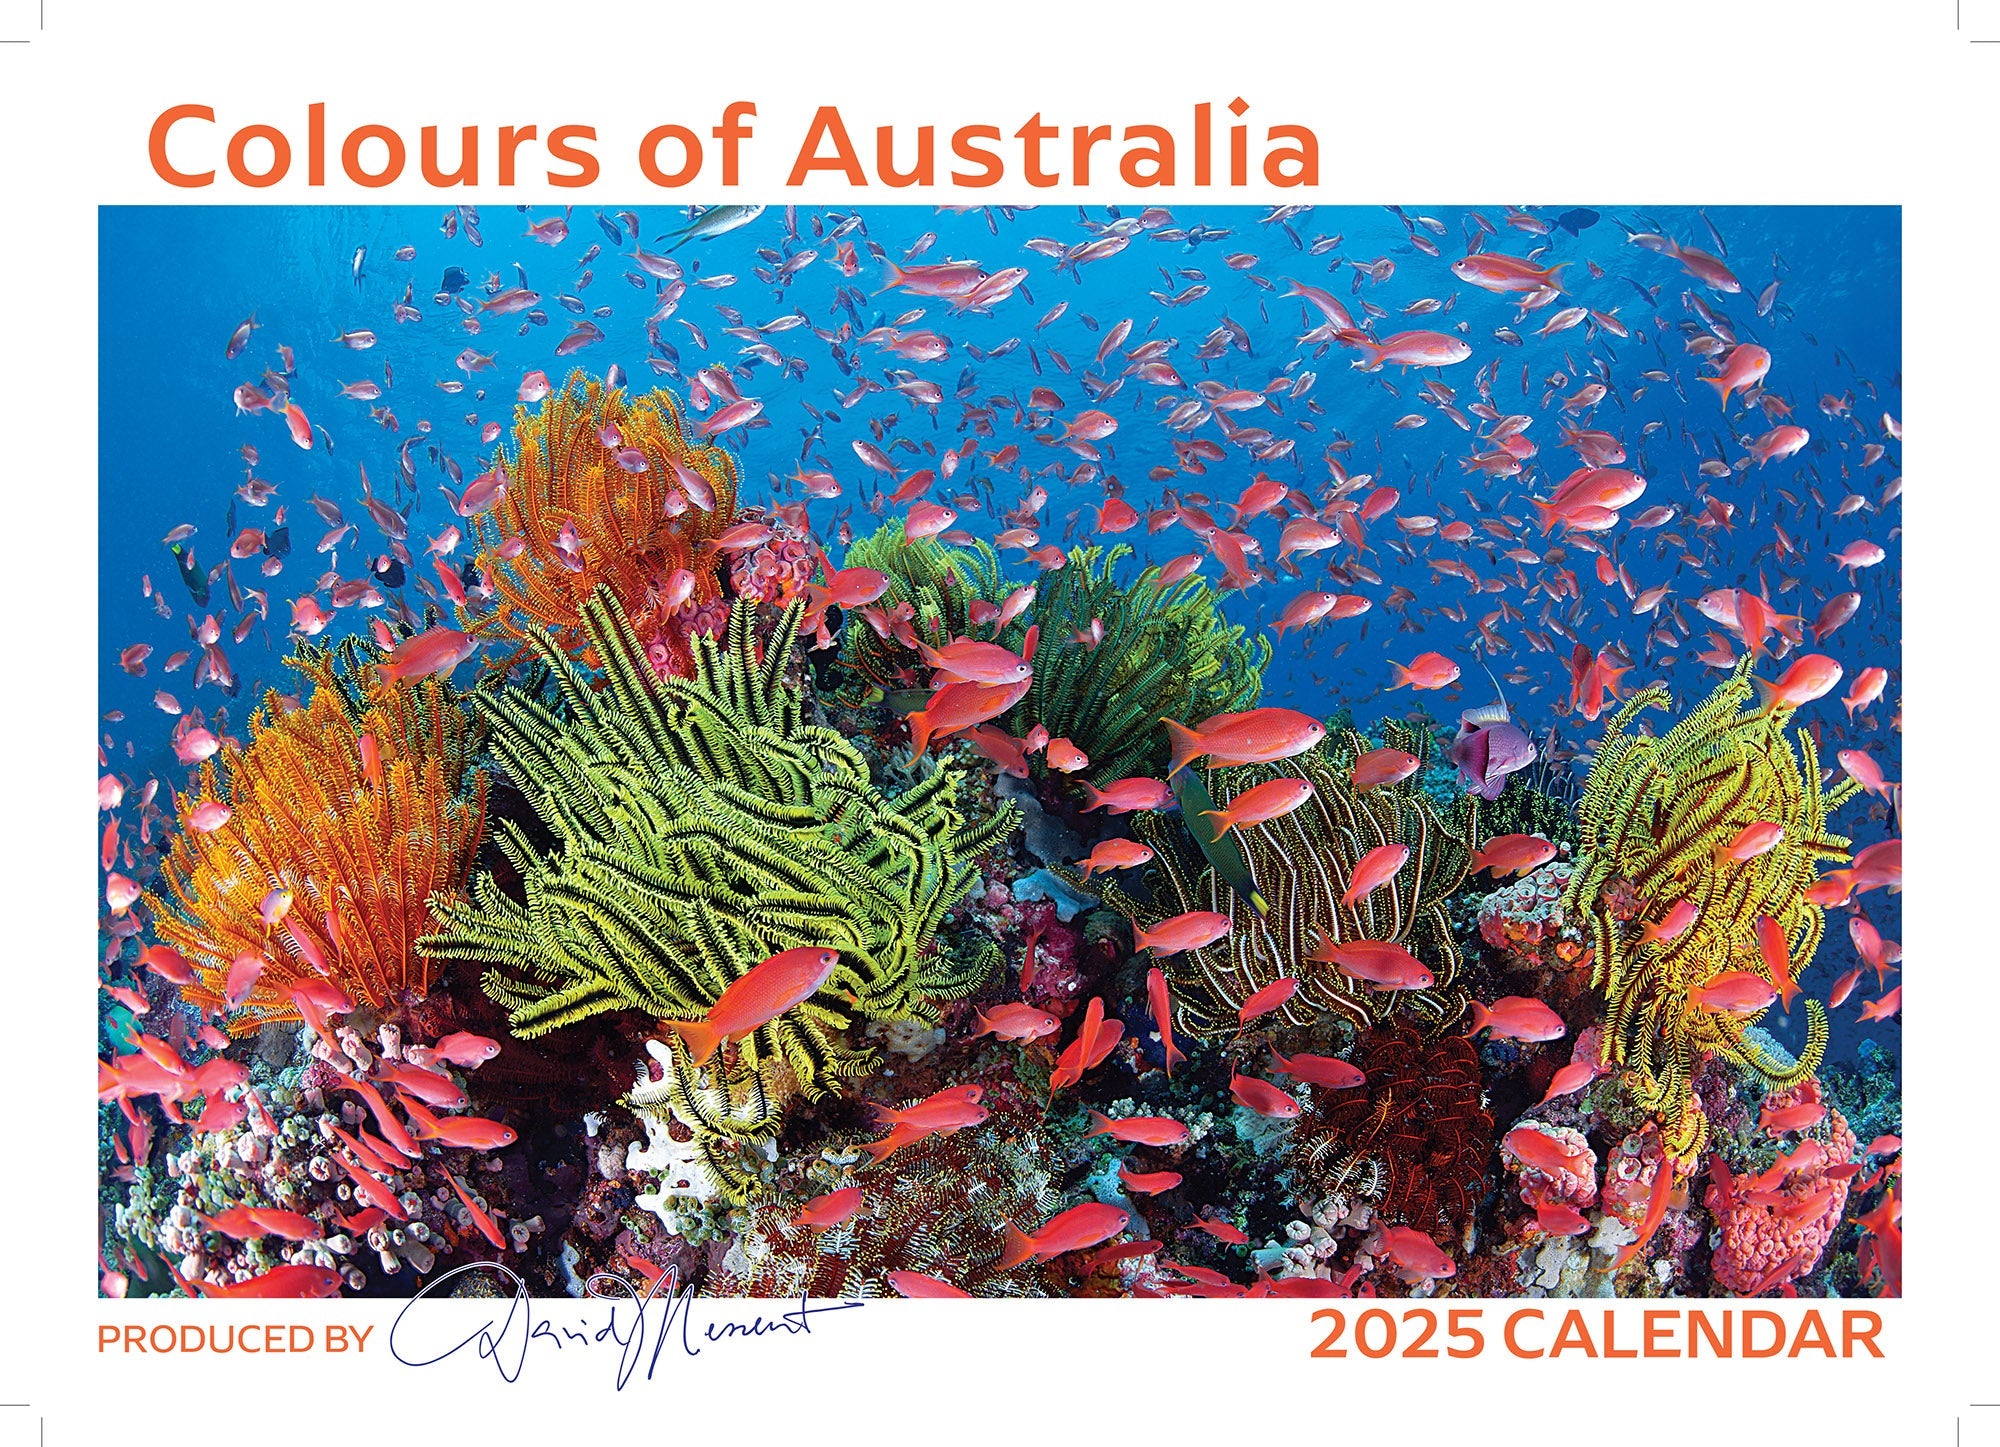 2025 Colours of Australia By David Messent - Horizontal Wall Calendar